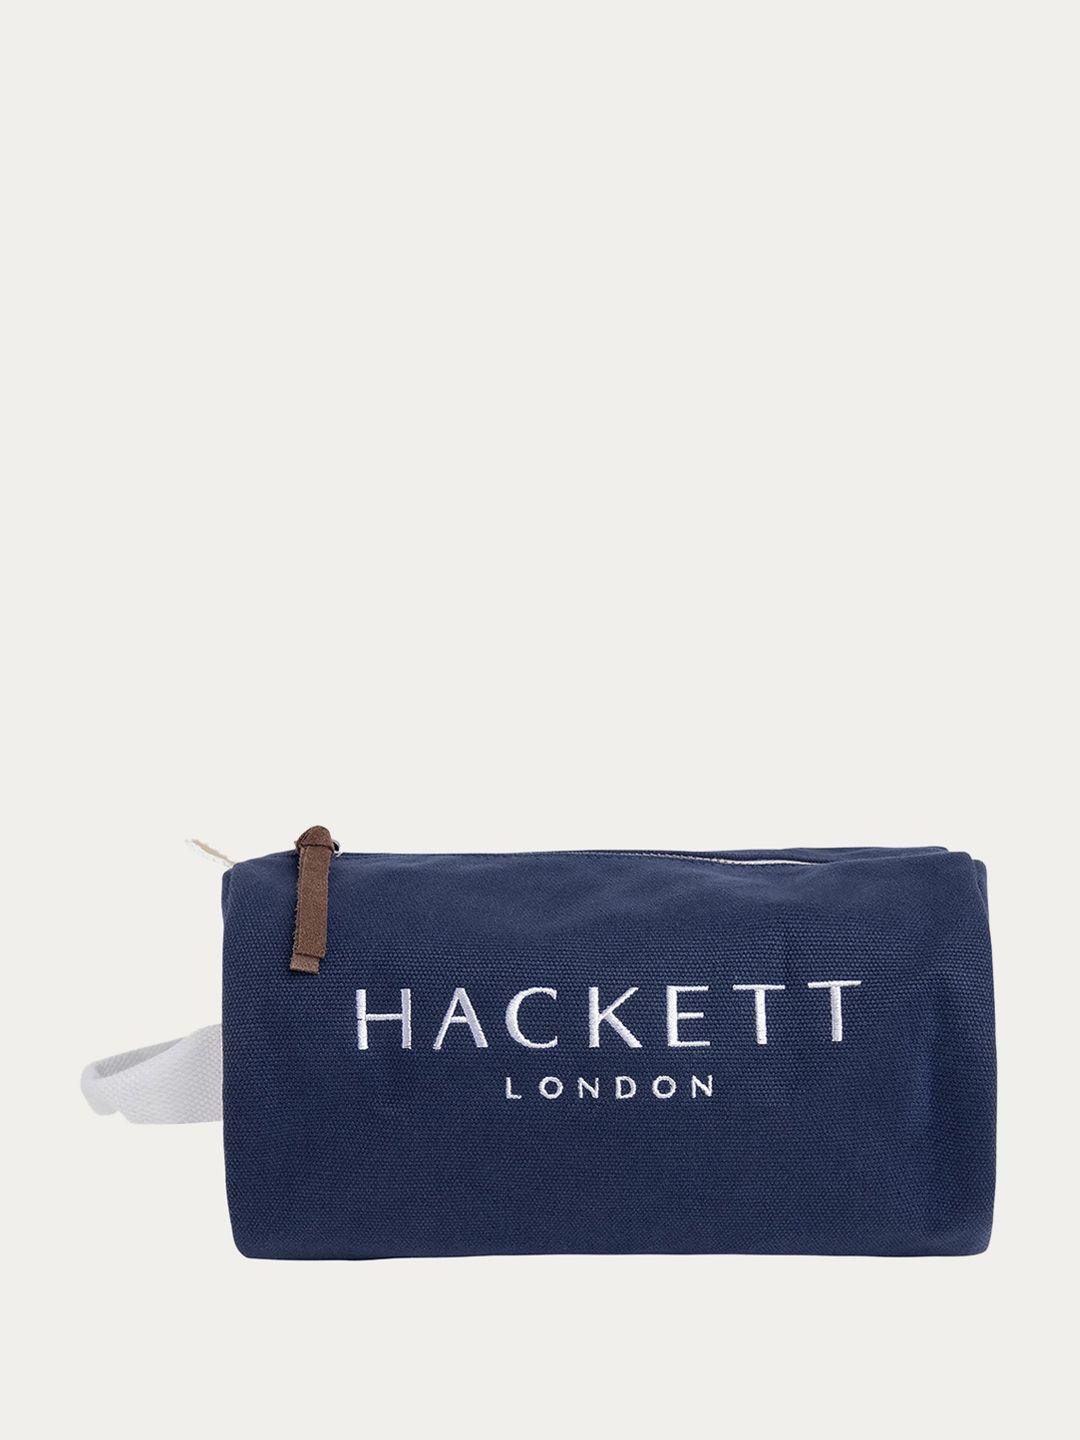 hackett london printed travel accessory